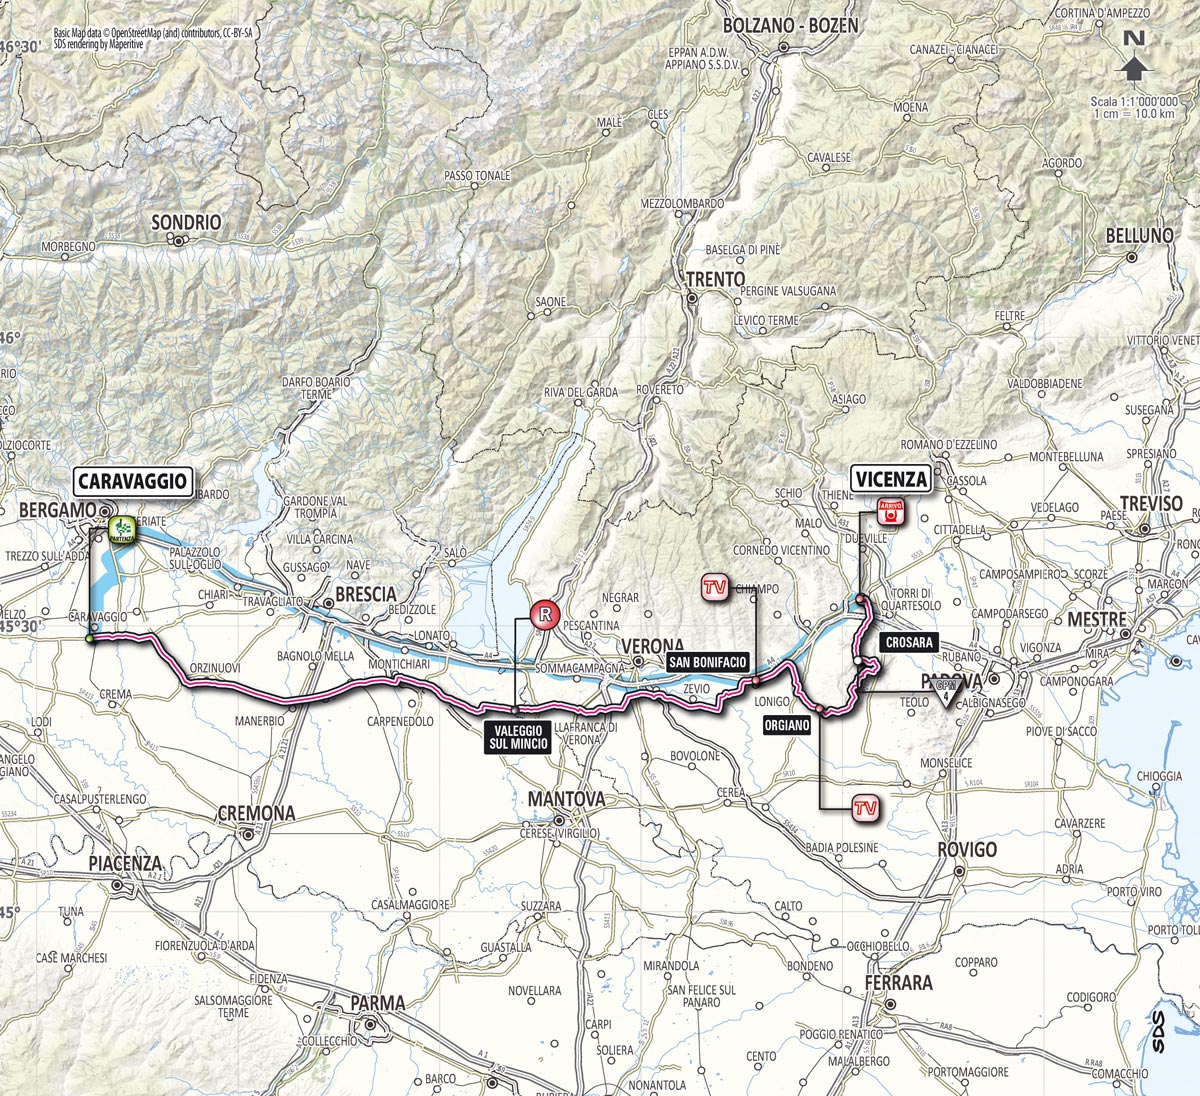 Giro d'Italia 2013 stage 17 map